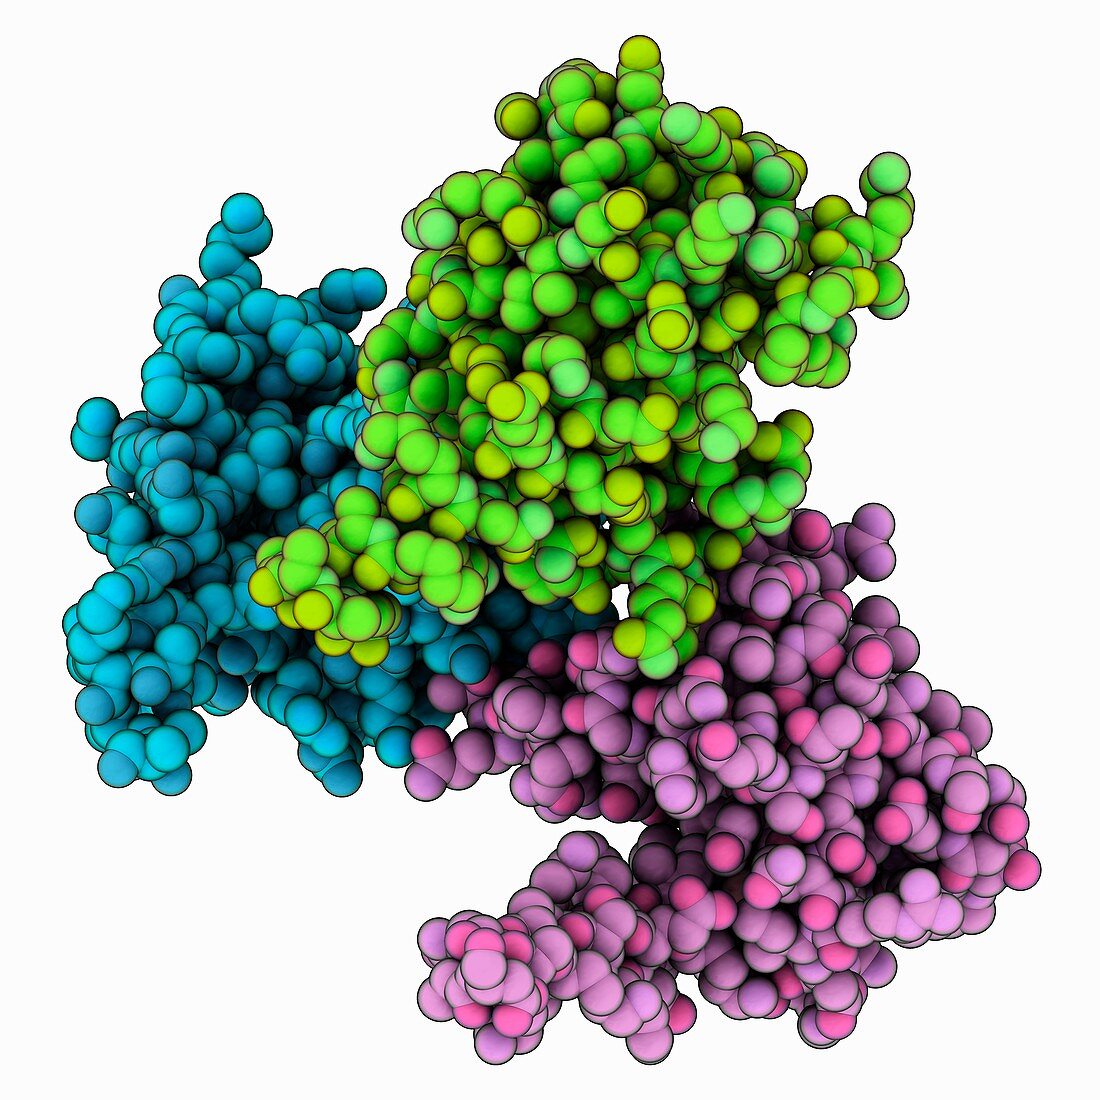 Trimeric HIV-1 matrix protein